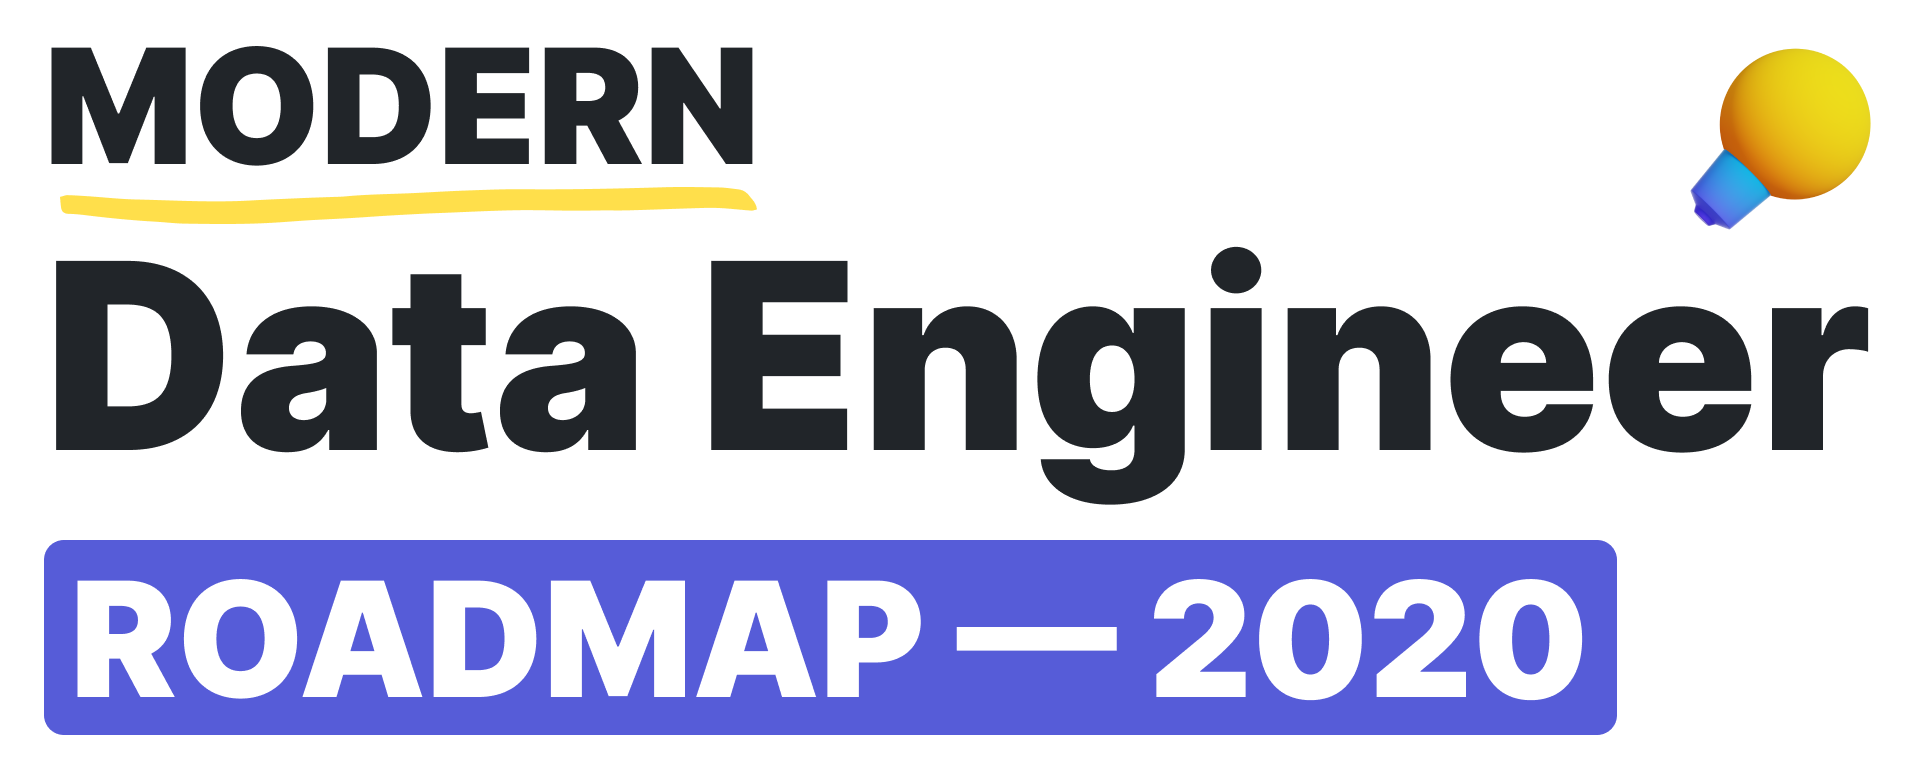 Modern Data Engineer Roadmap 2020